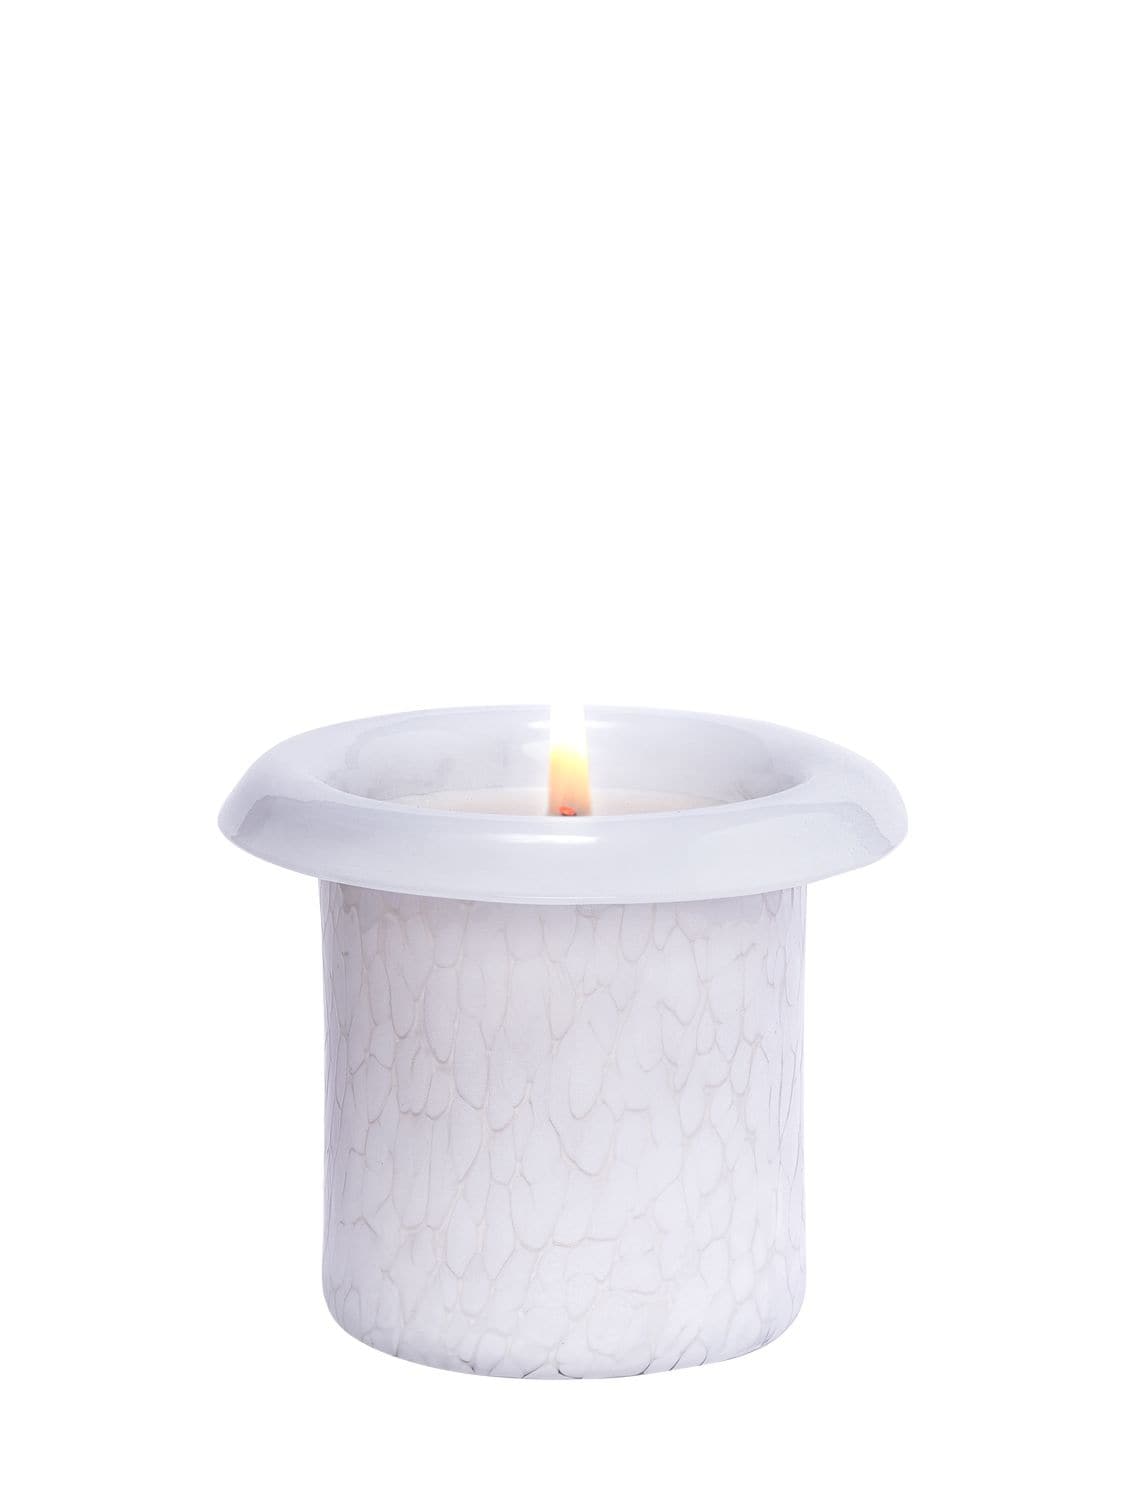 Aina Kari "600" Murano Glass Candle In White